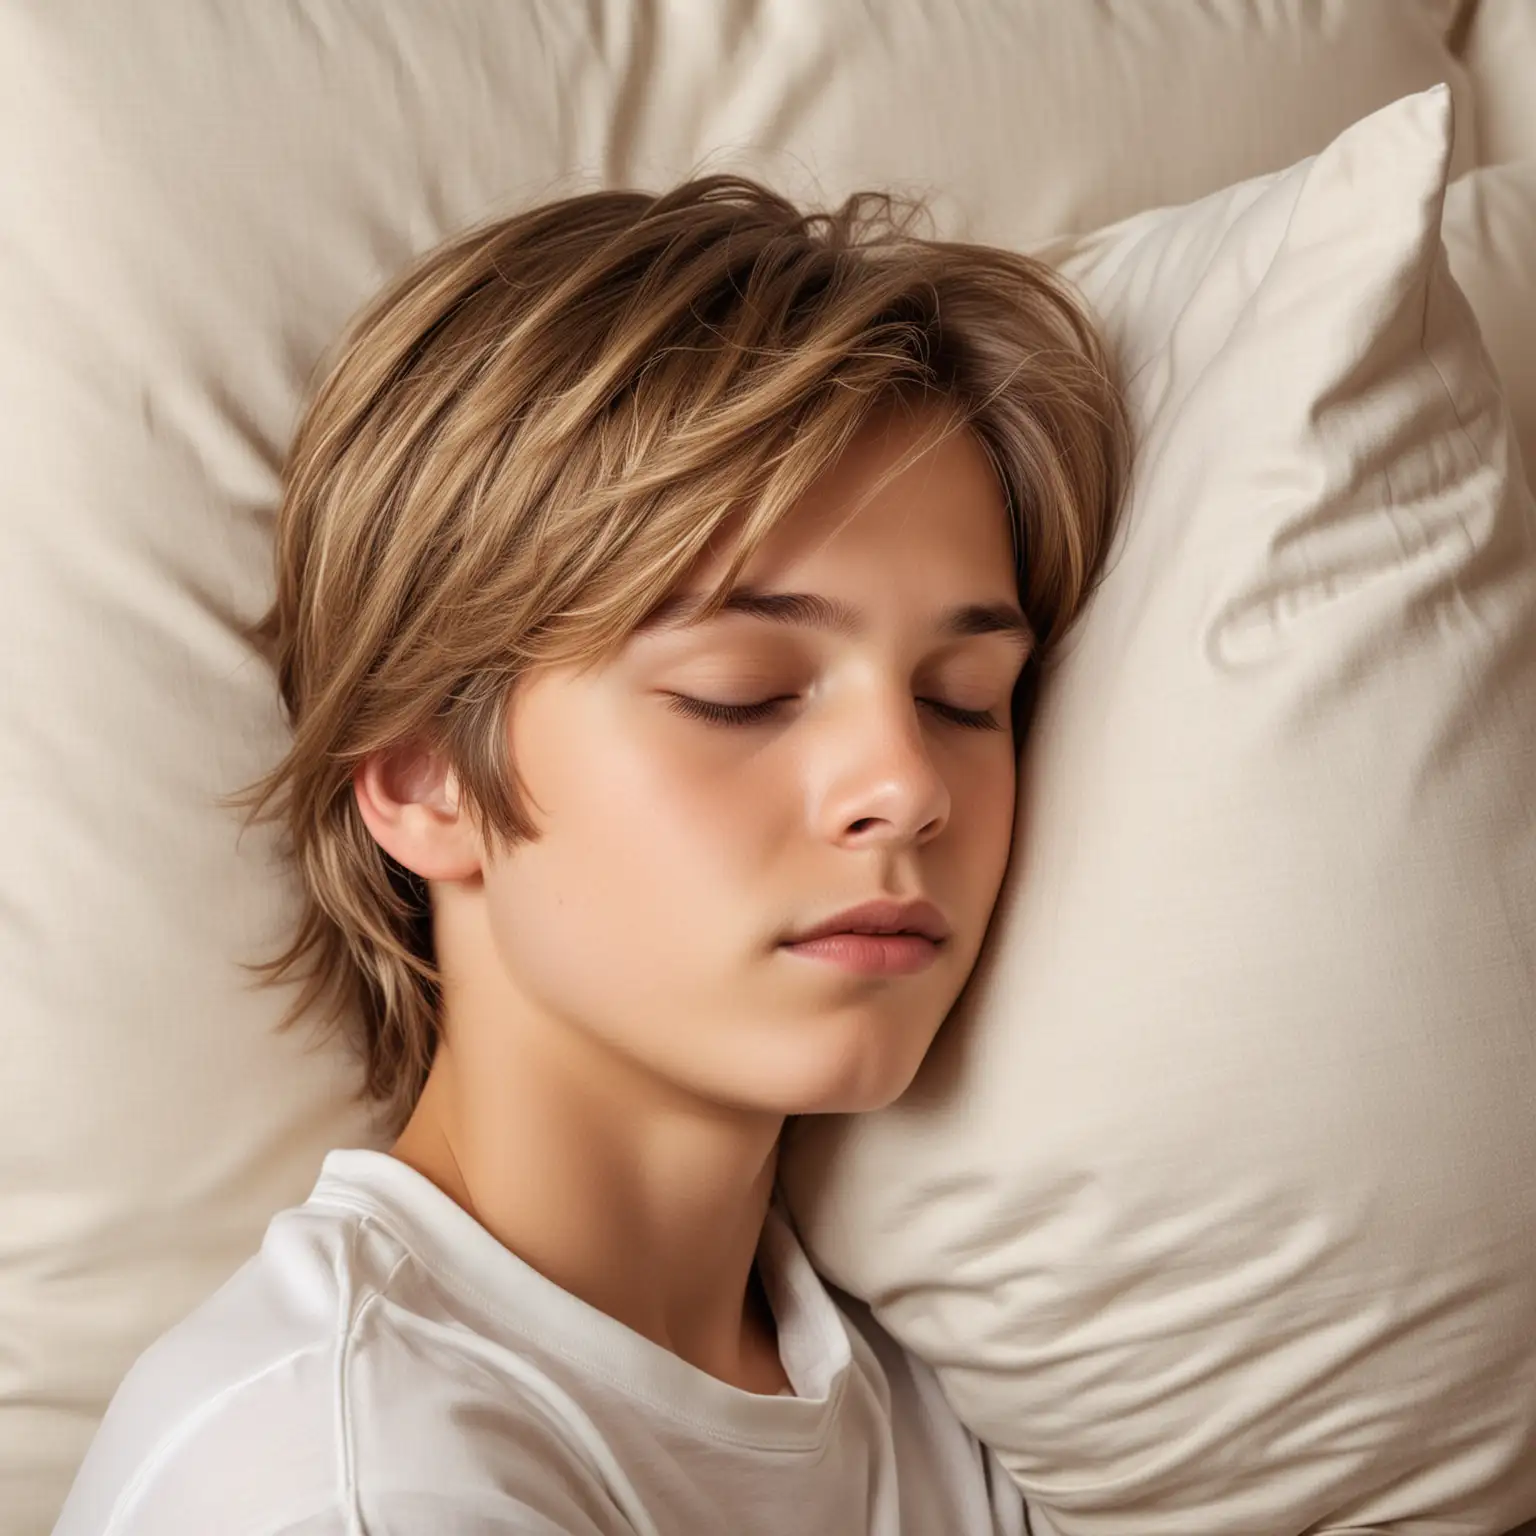 Studio Quality Photo of Sleeping Twelve Year Old Boy with Soft Shiny Medium Length Hair